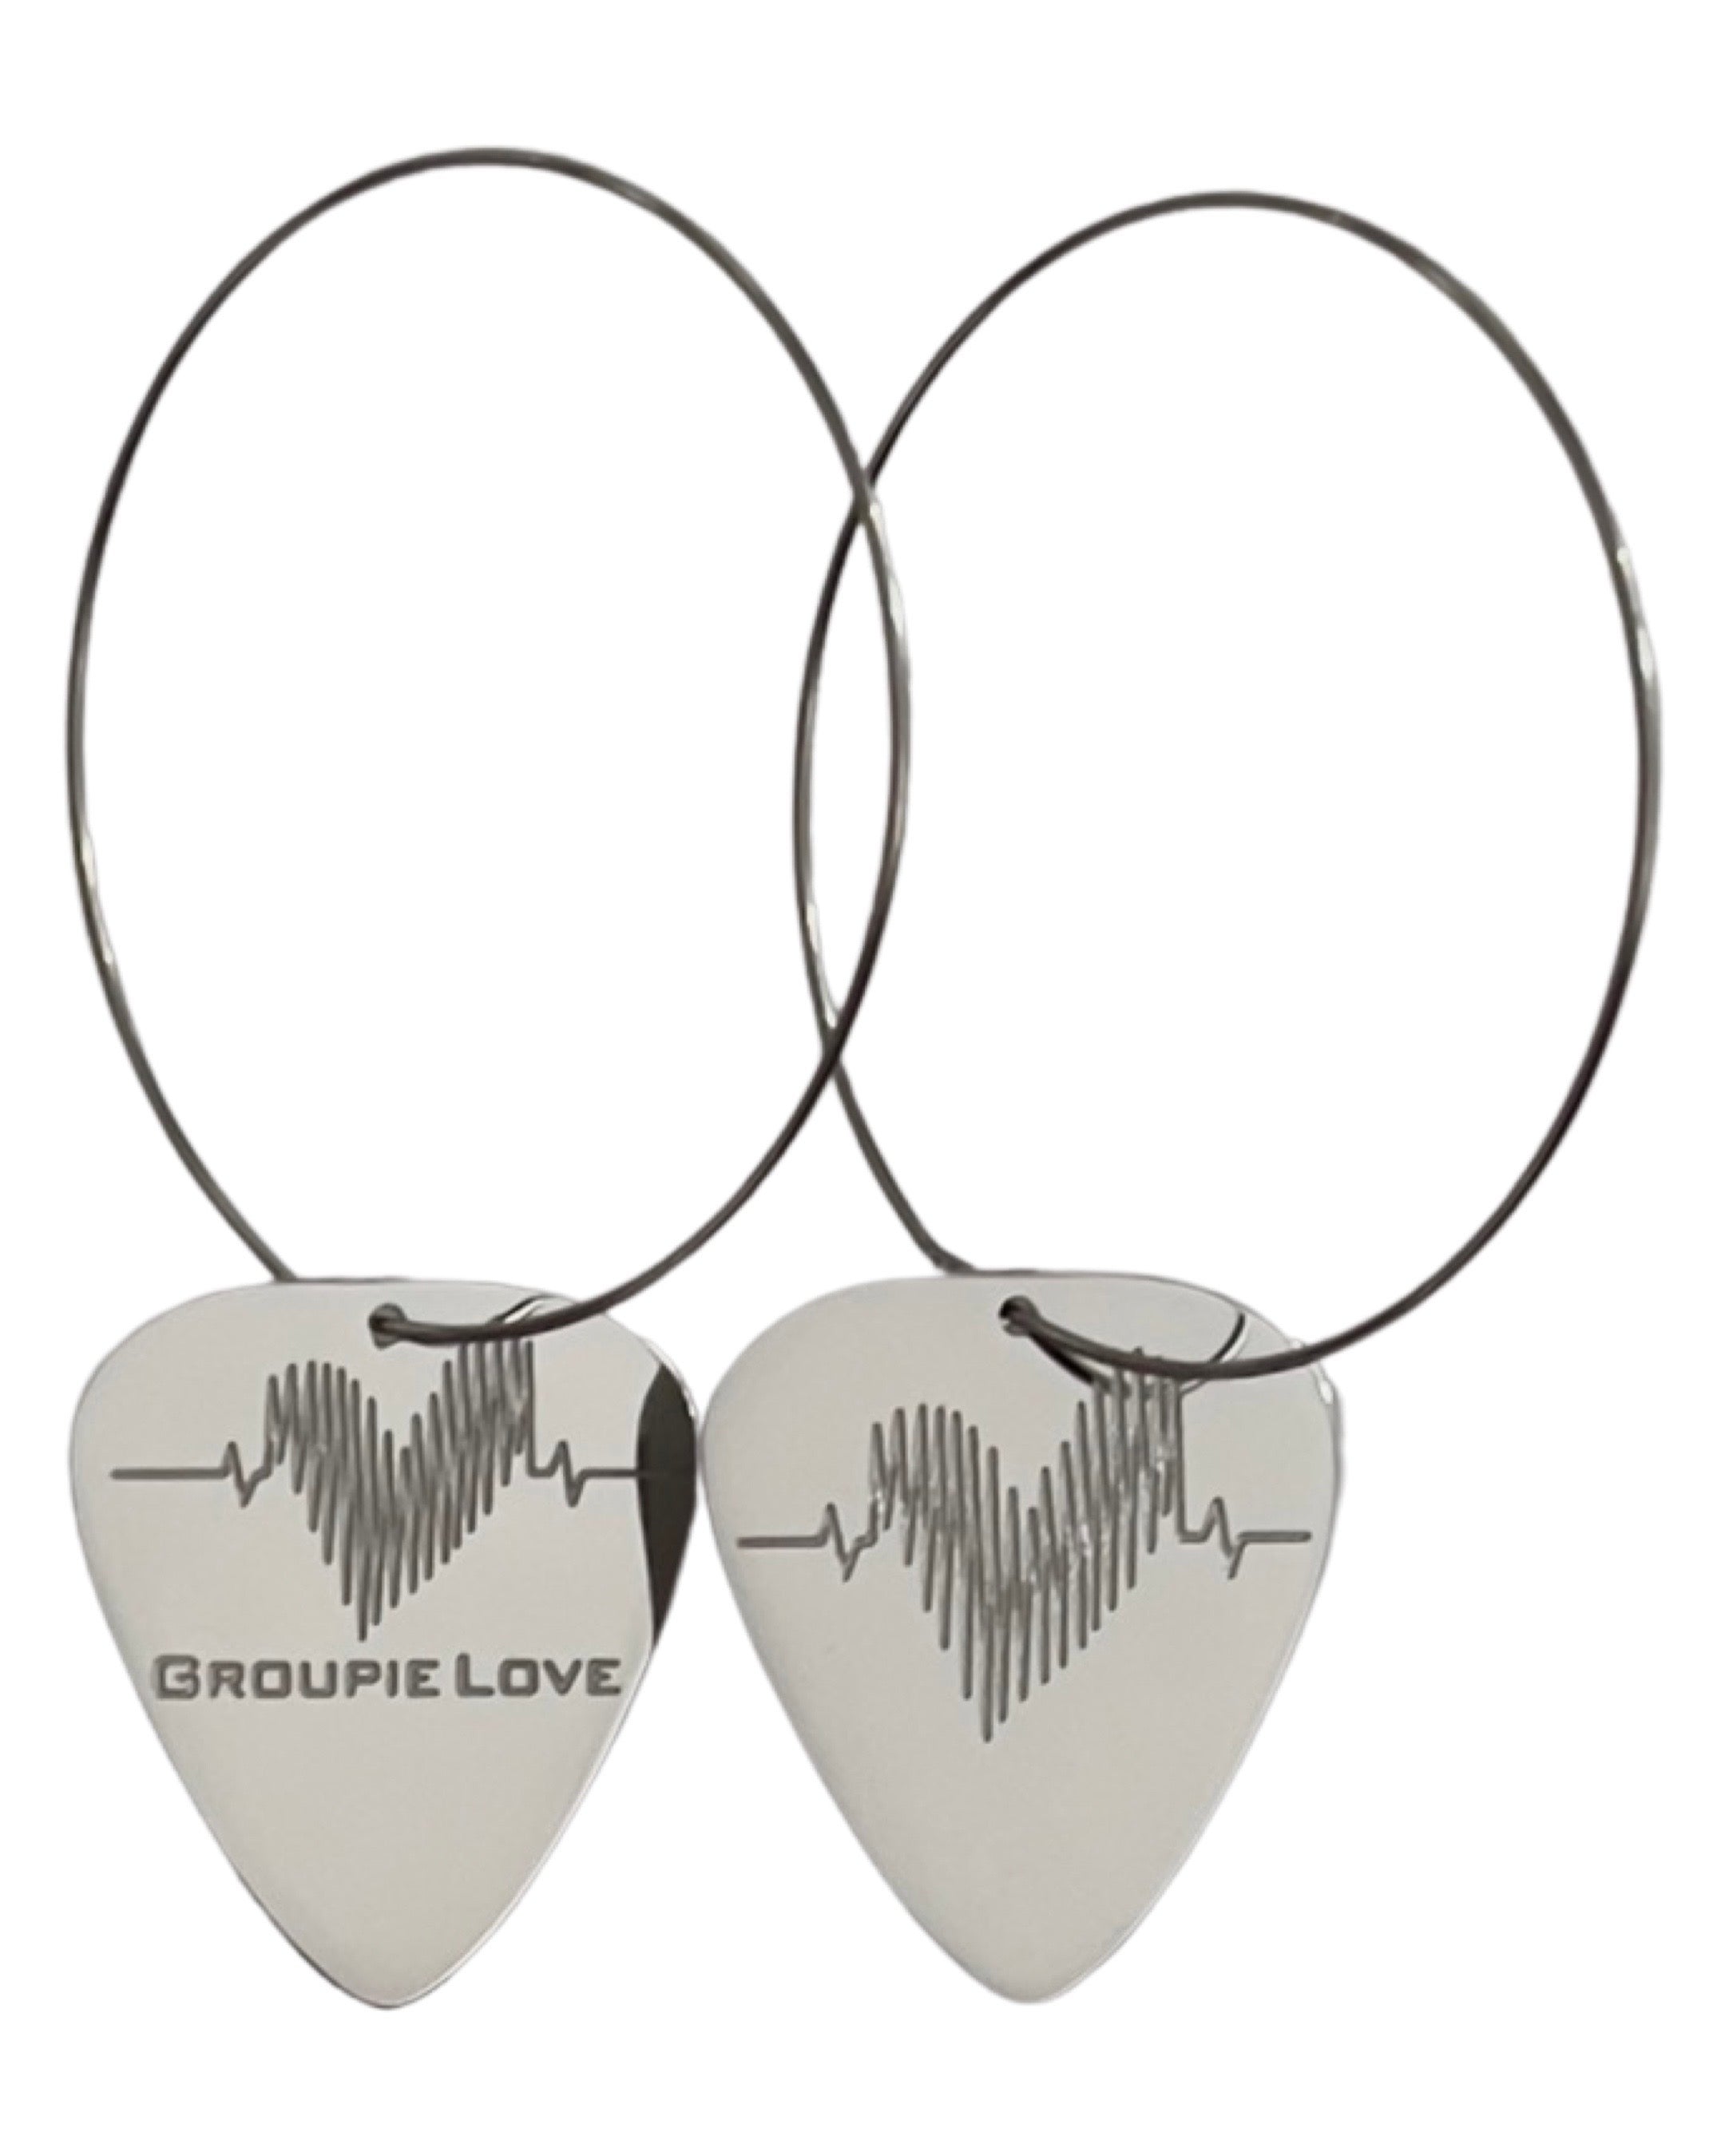 WS Groupie Love Steel Single Guitar Pick Earrings